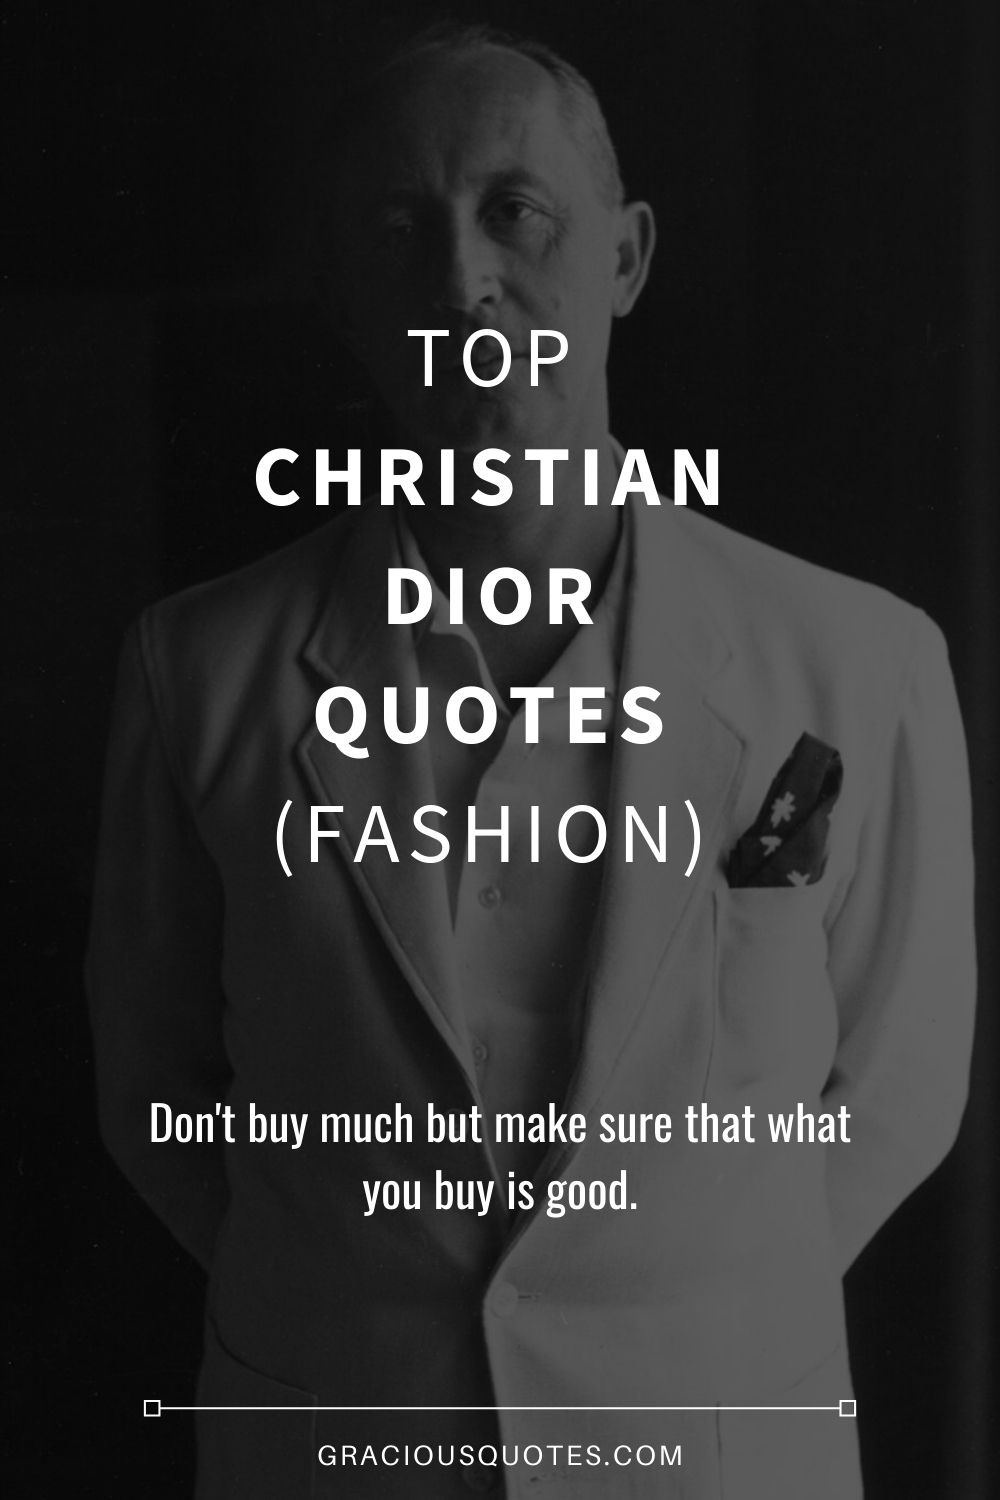 Dior on X: 